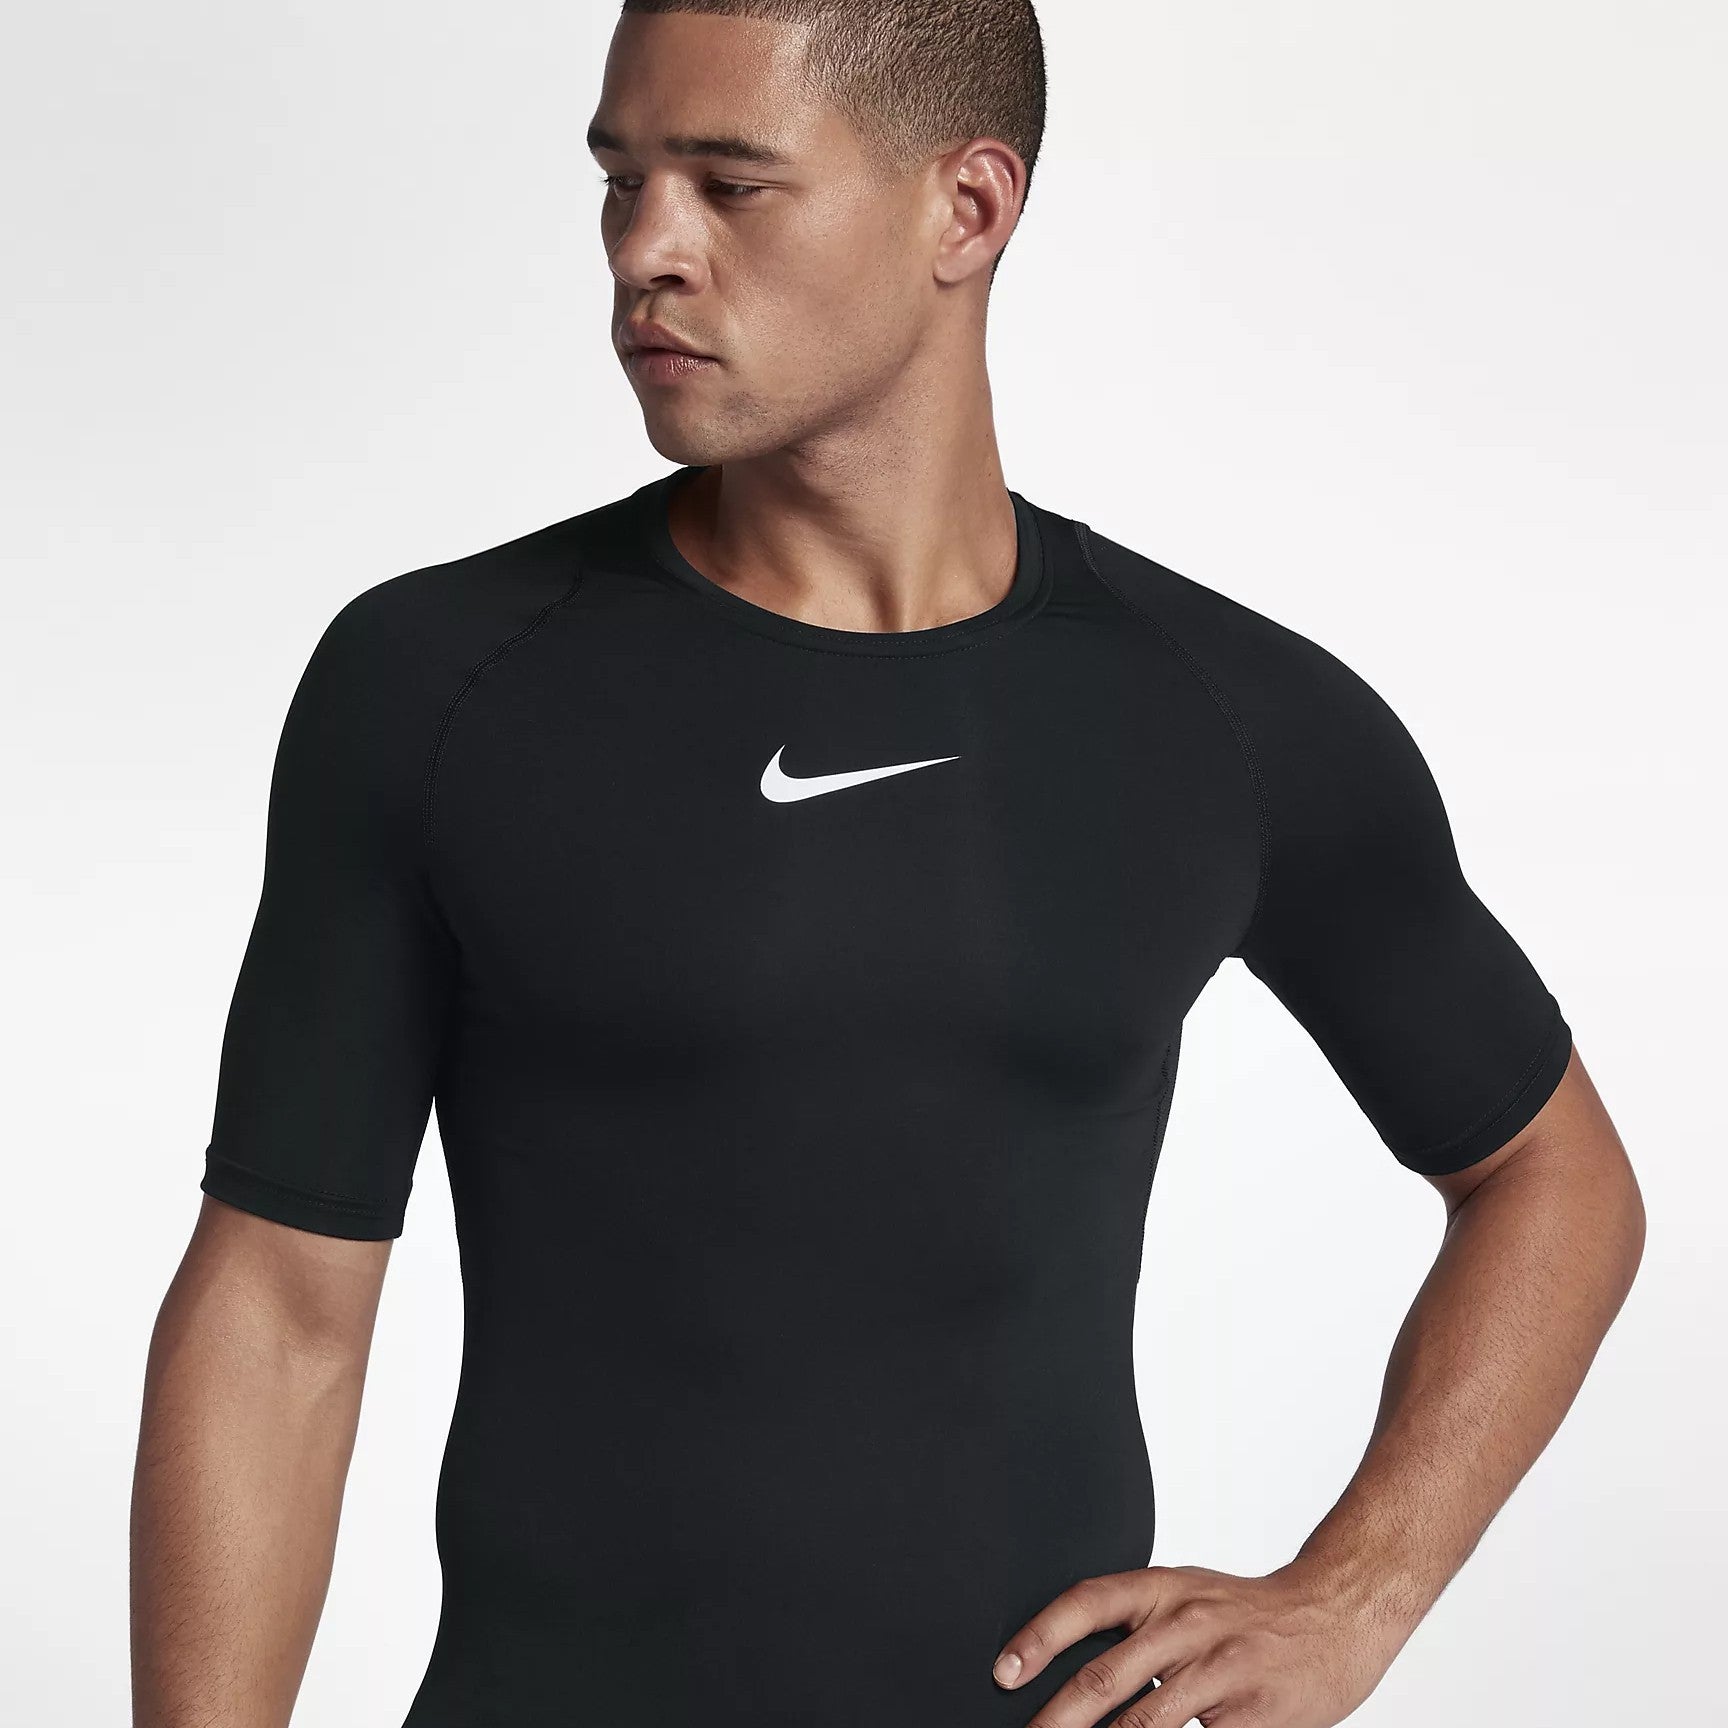 Nike Pro Training baselayer t-shirt in black